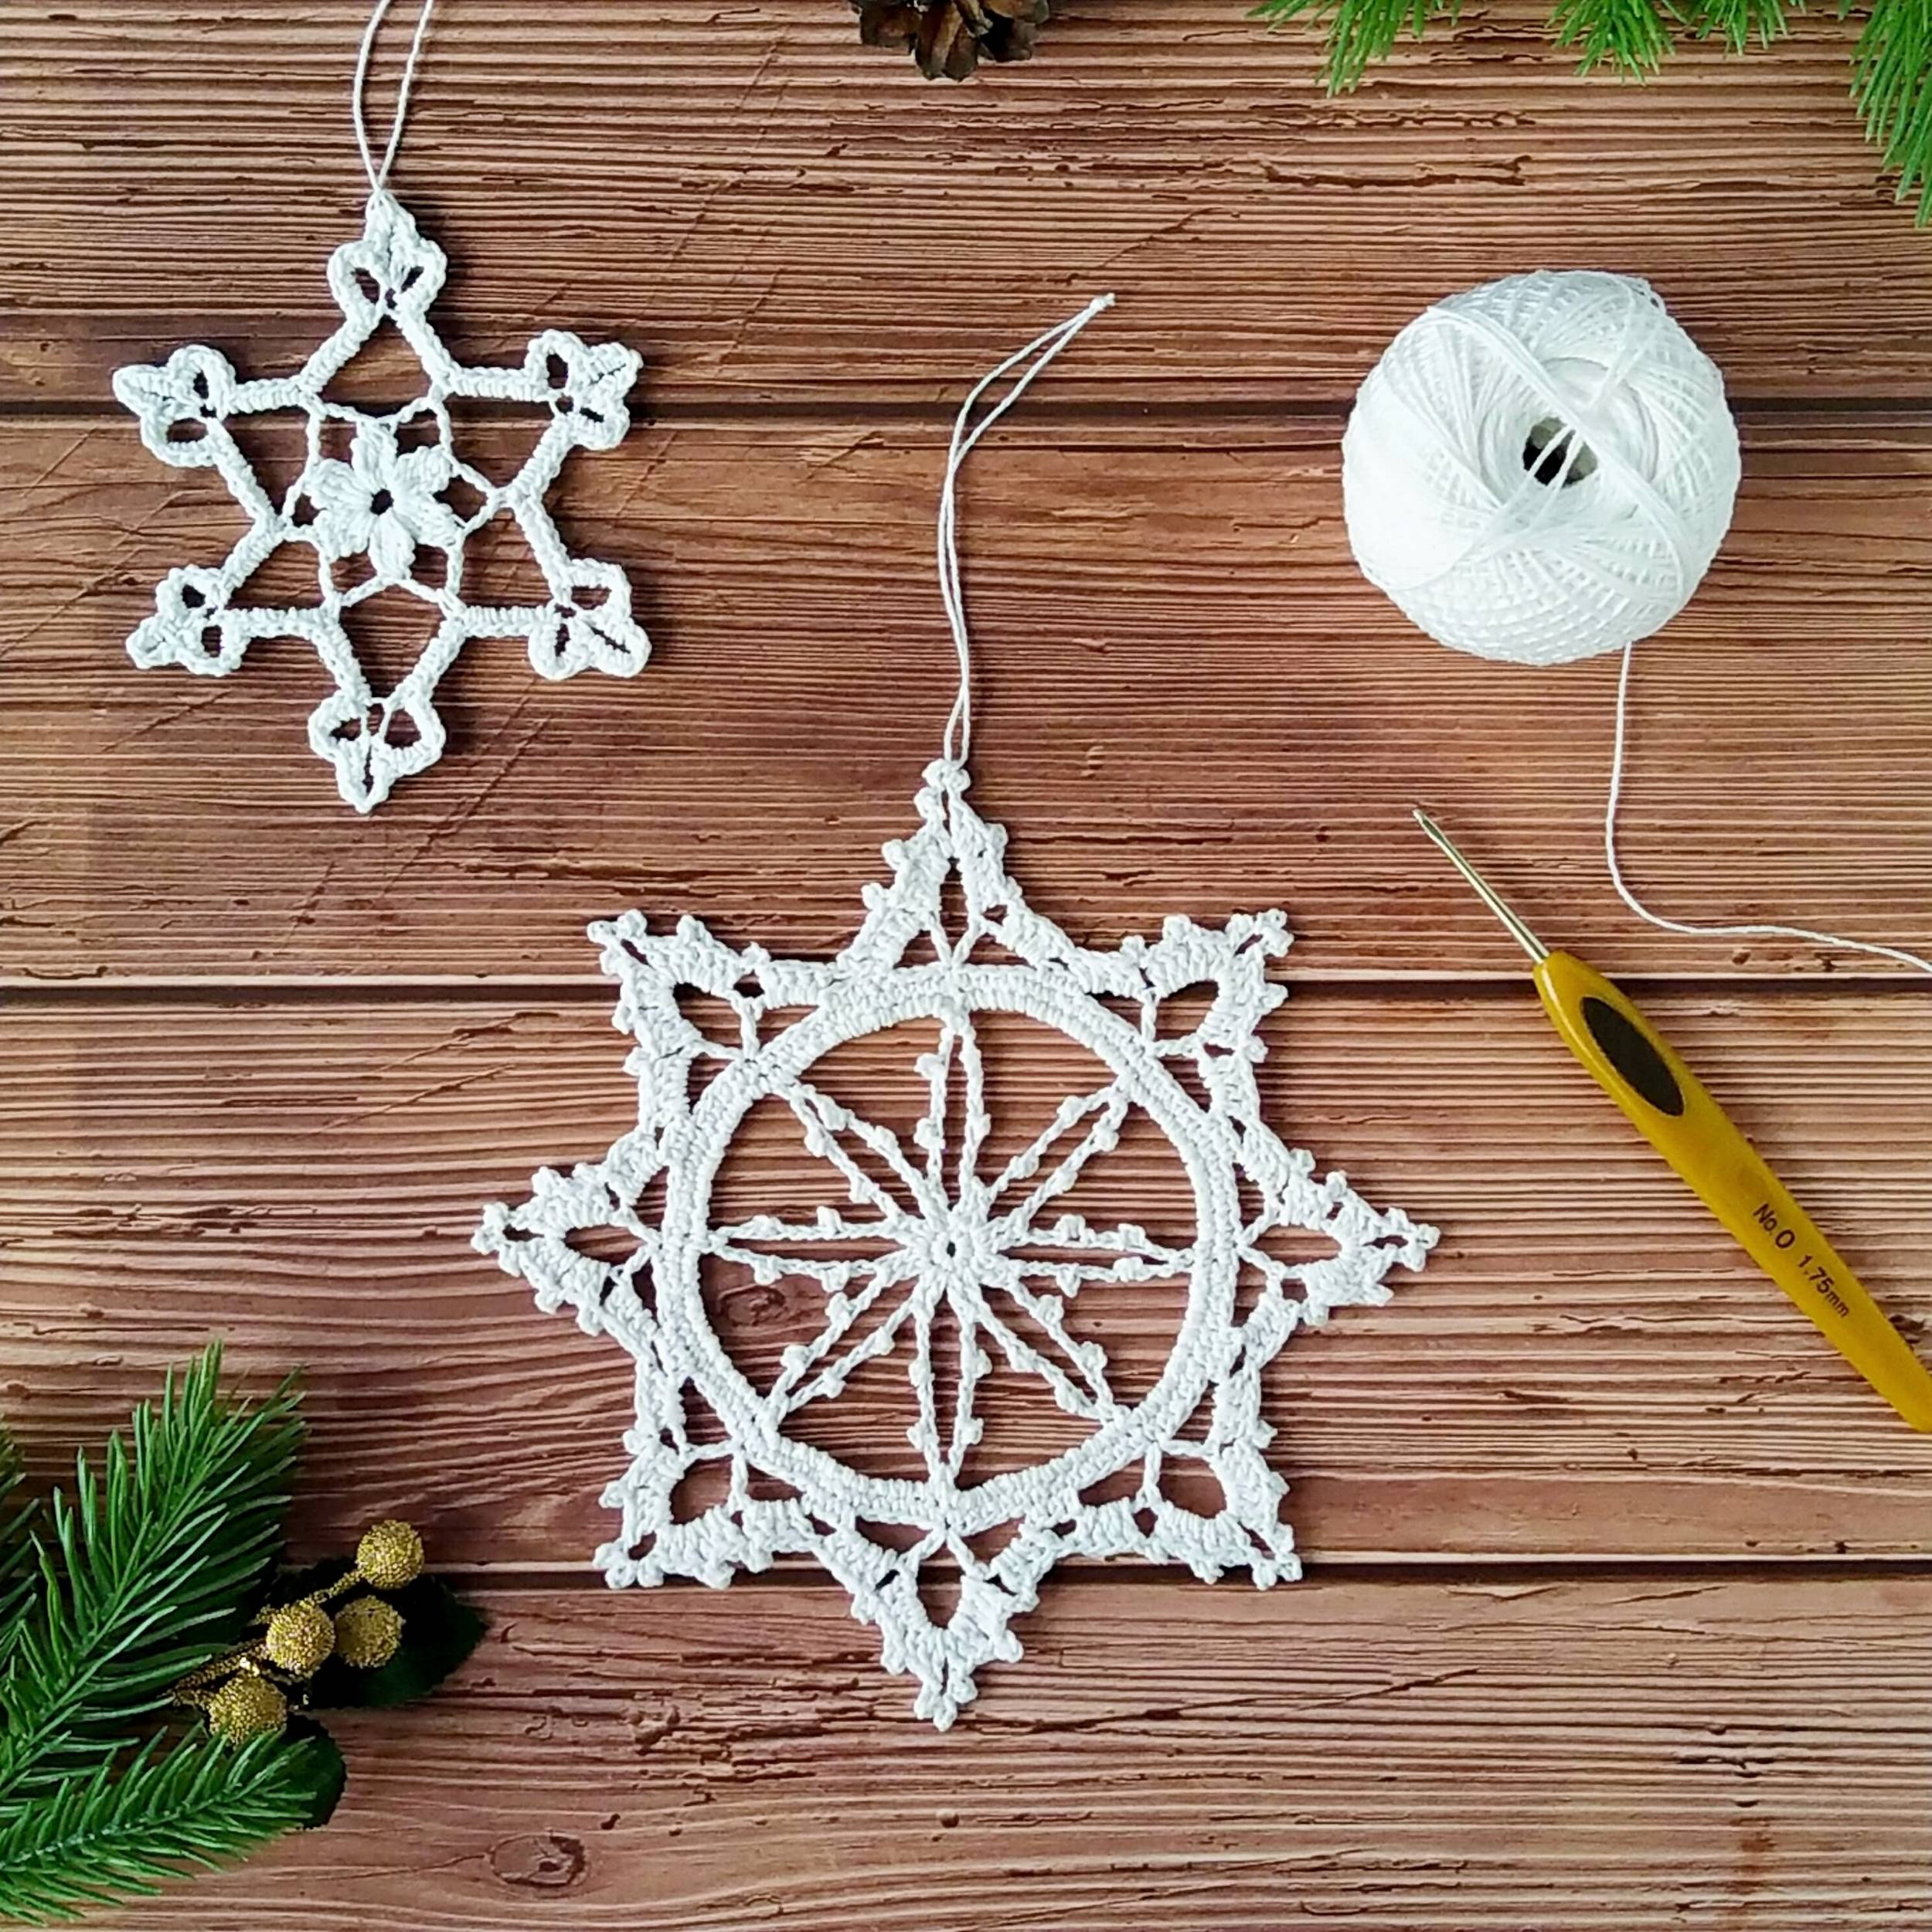 Crochet lace snowflake pattern 2 elegant Christmas ornaments